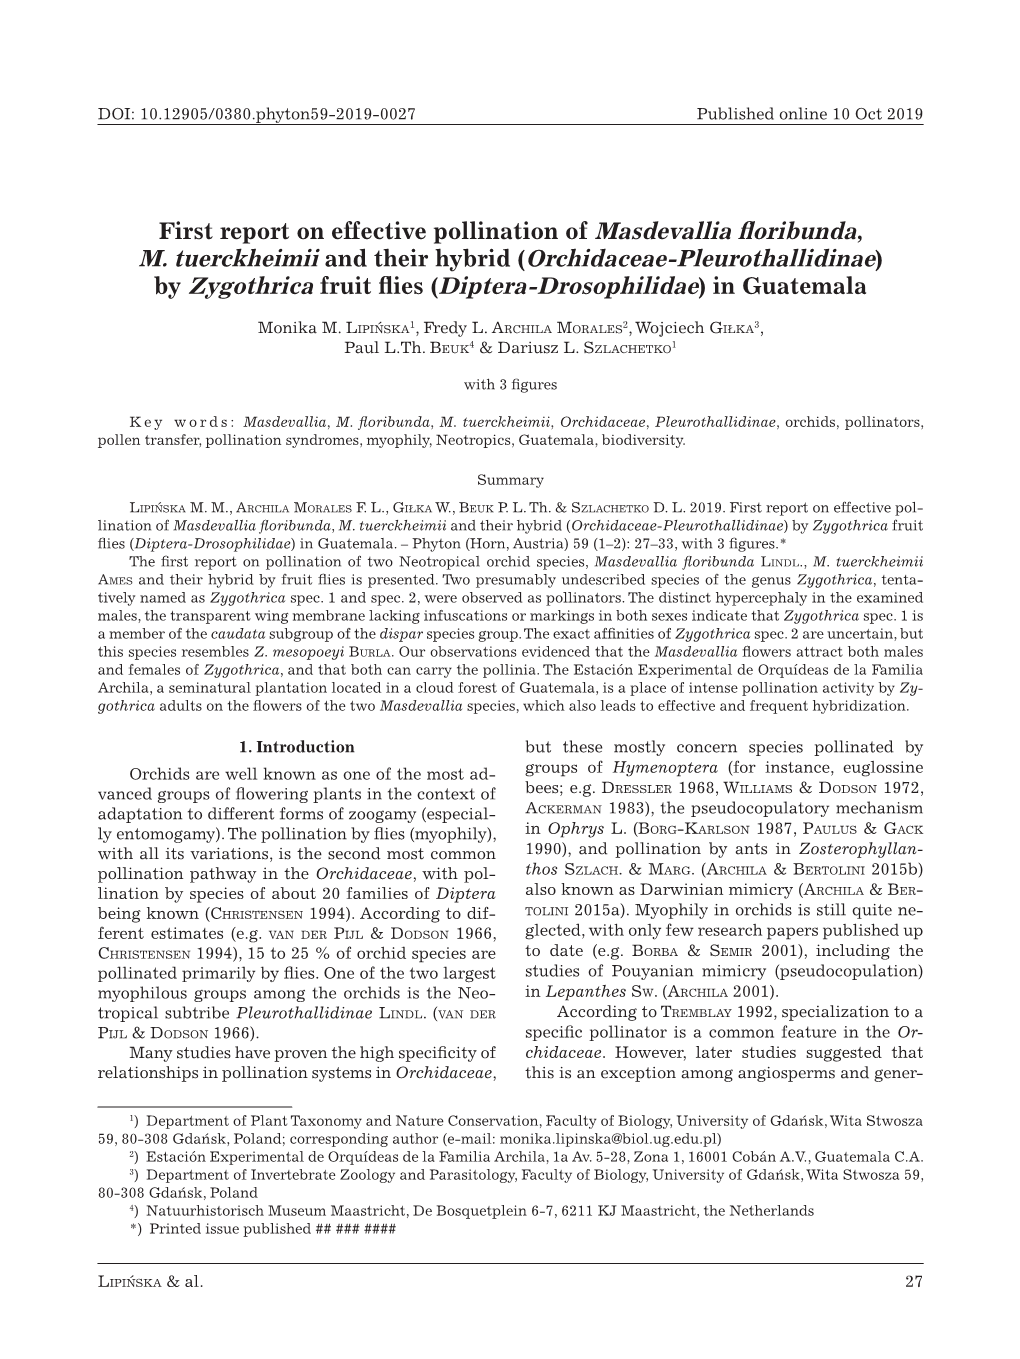 First Report on Effective Pollination of Masdevallia Floribunda, M